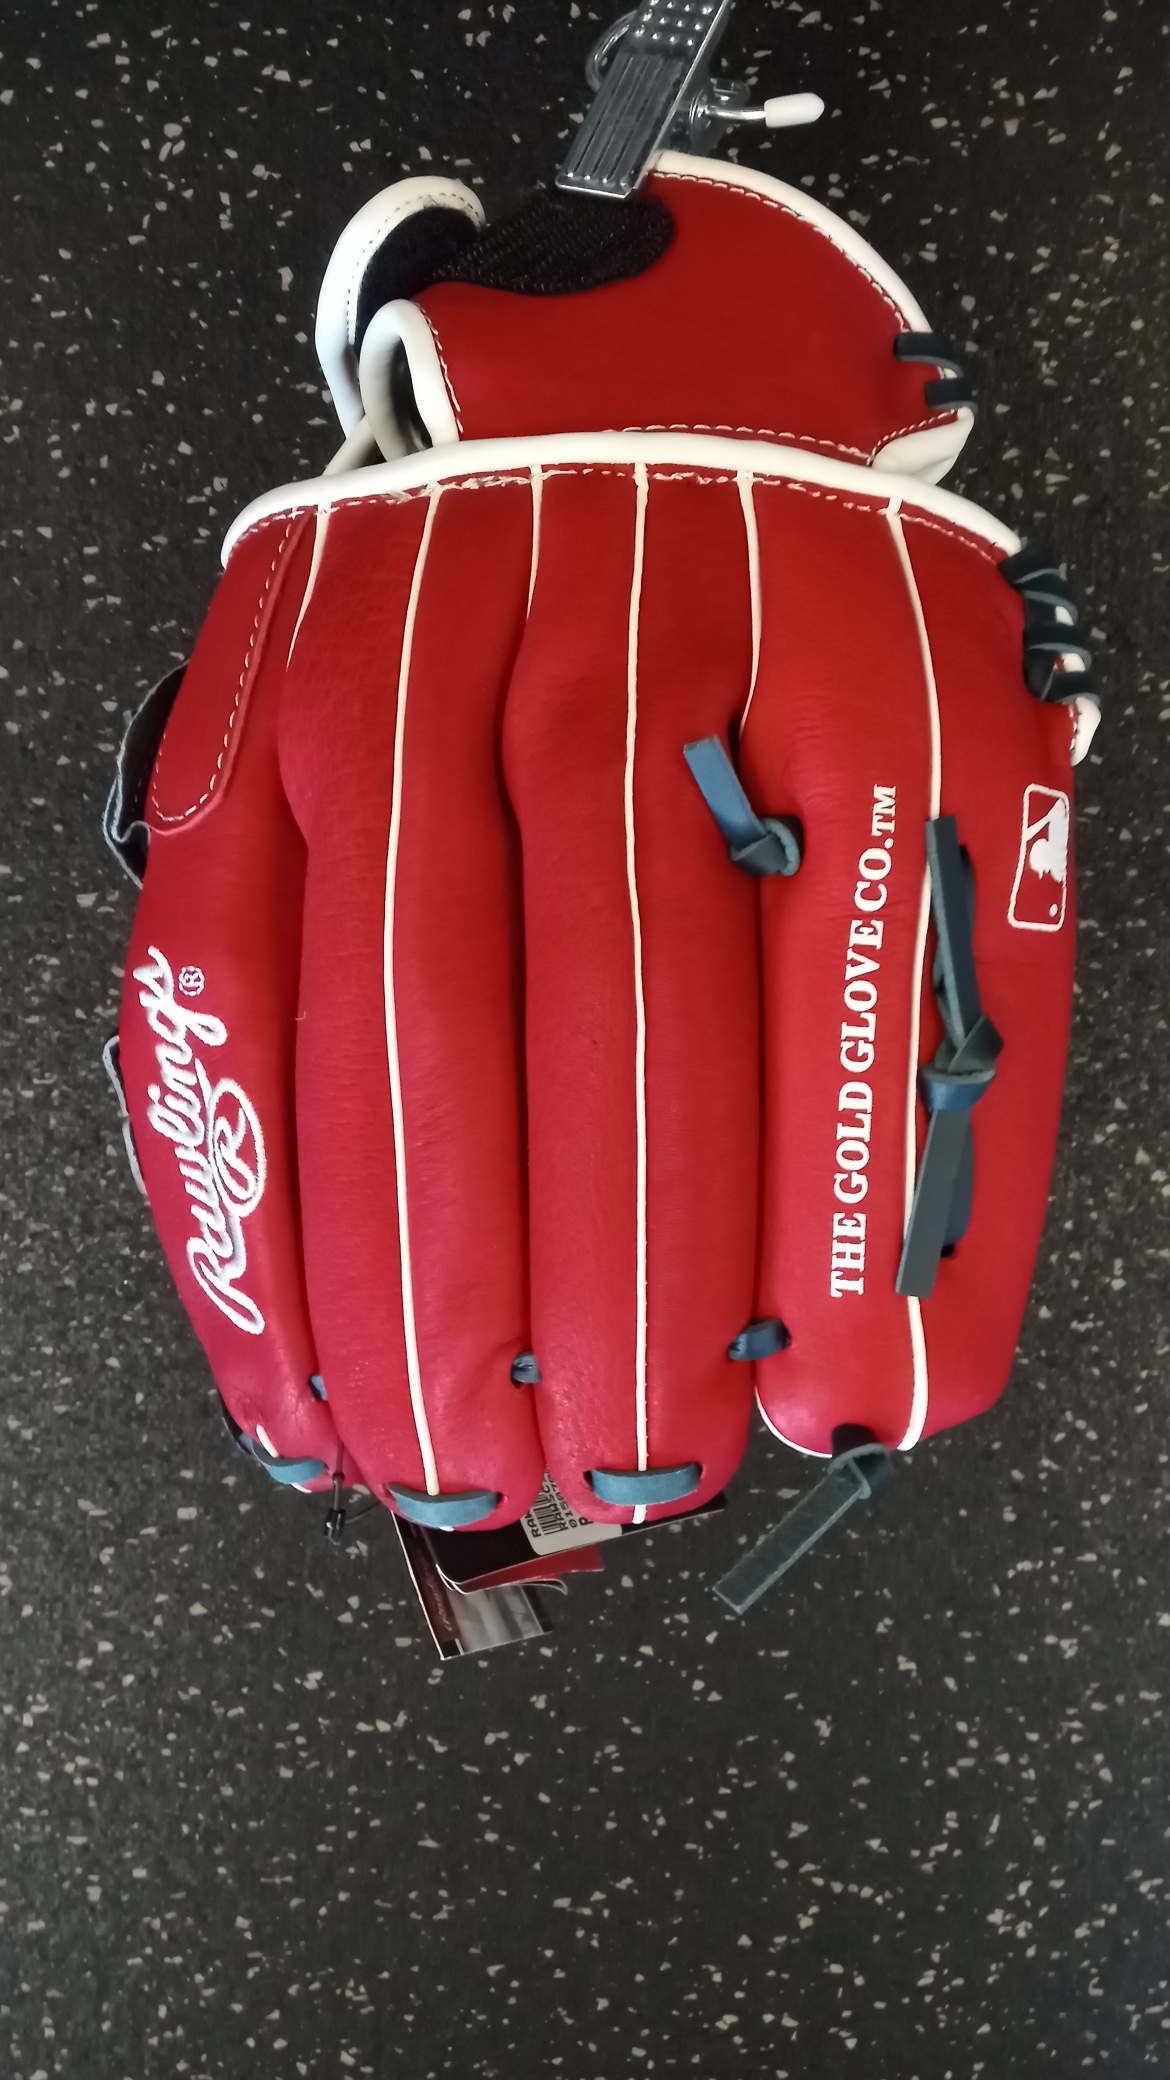 New Rawlings Right Hand Throw Baseball Glove 11.5"